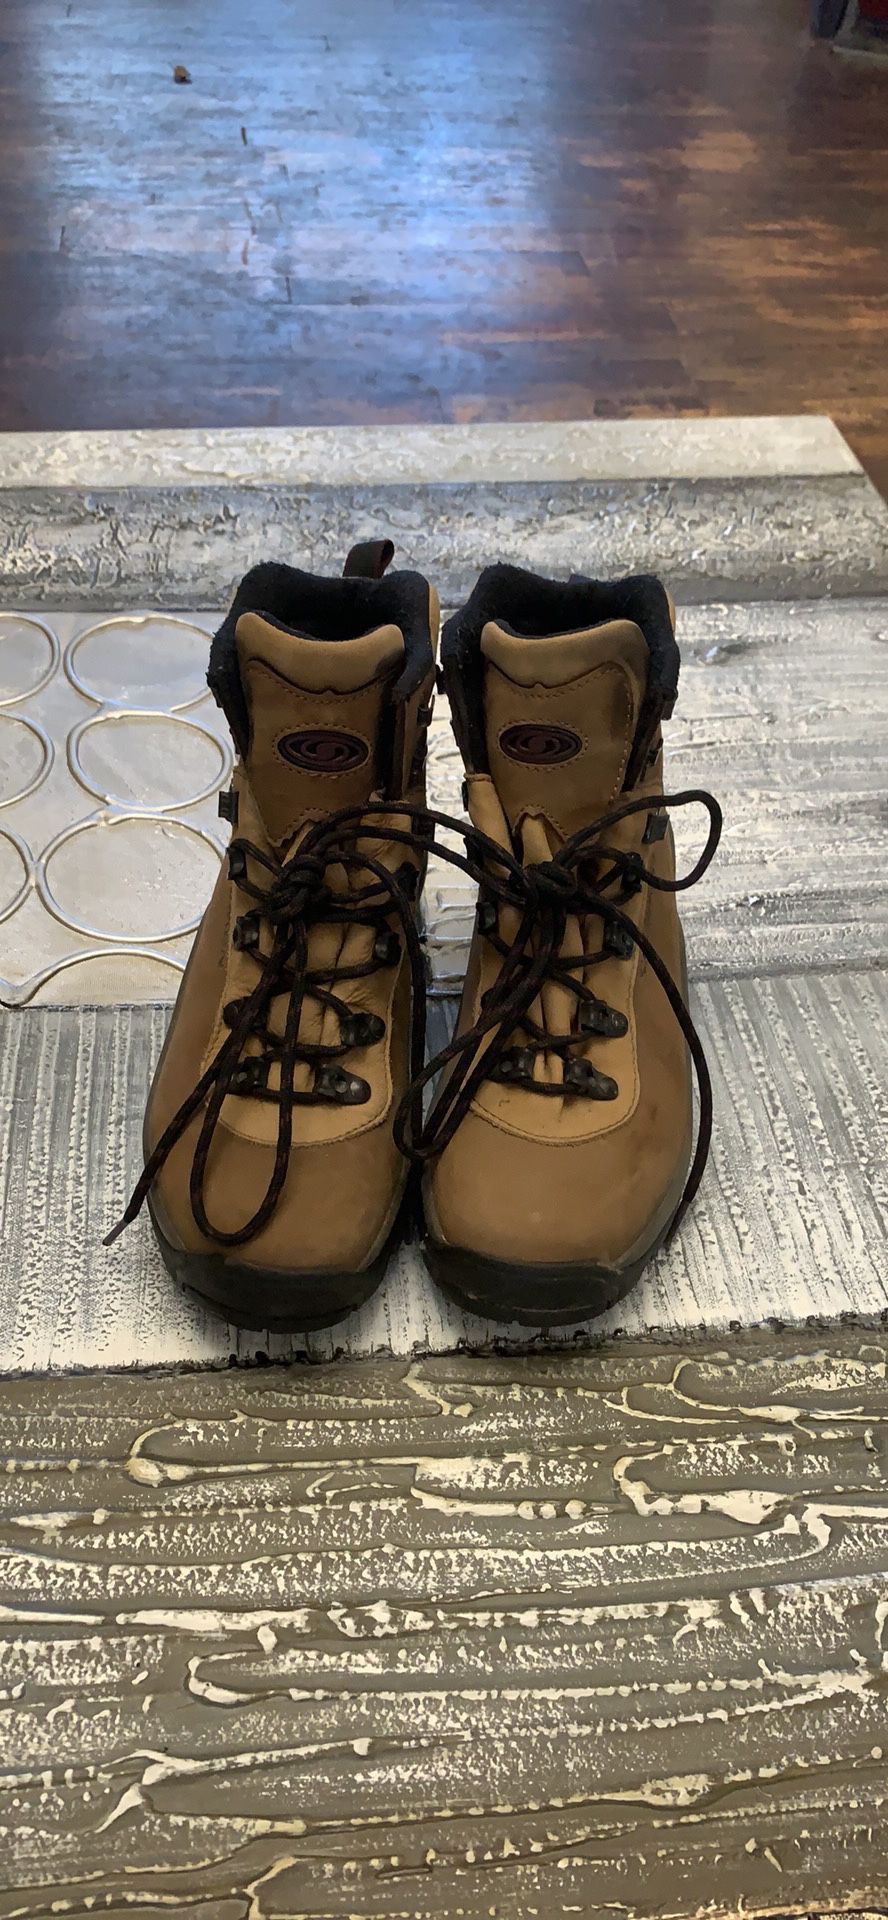 Salomon Hiking Boots - 71/2